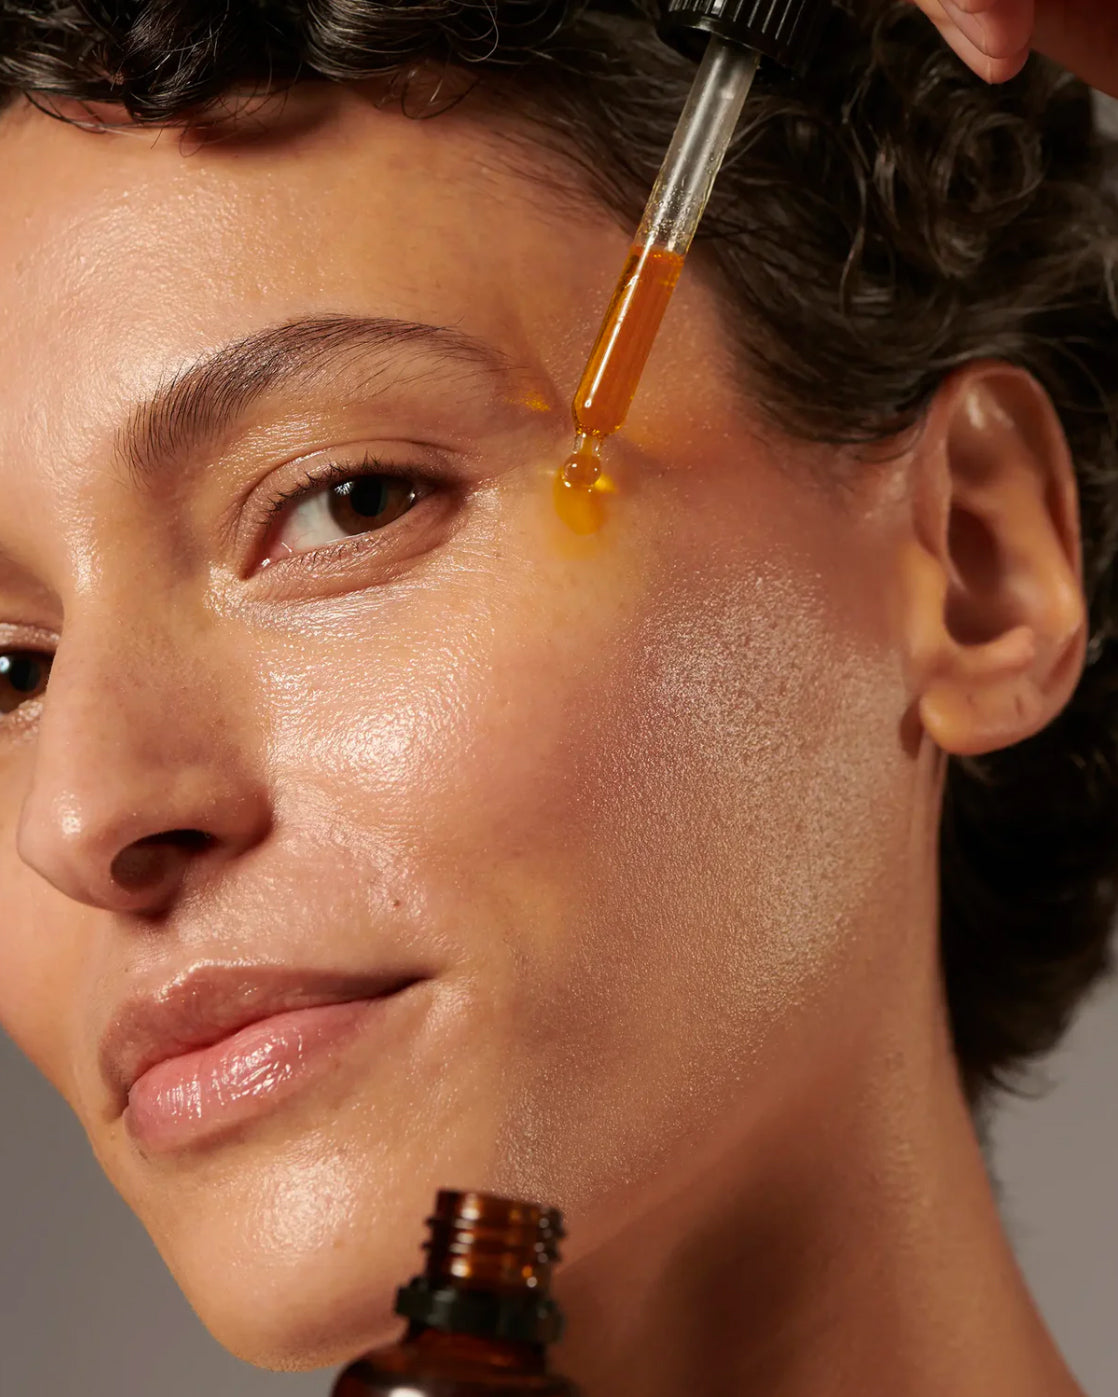 Facial Beauty Elixir – 100% Organic Rosehip Oil